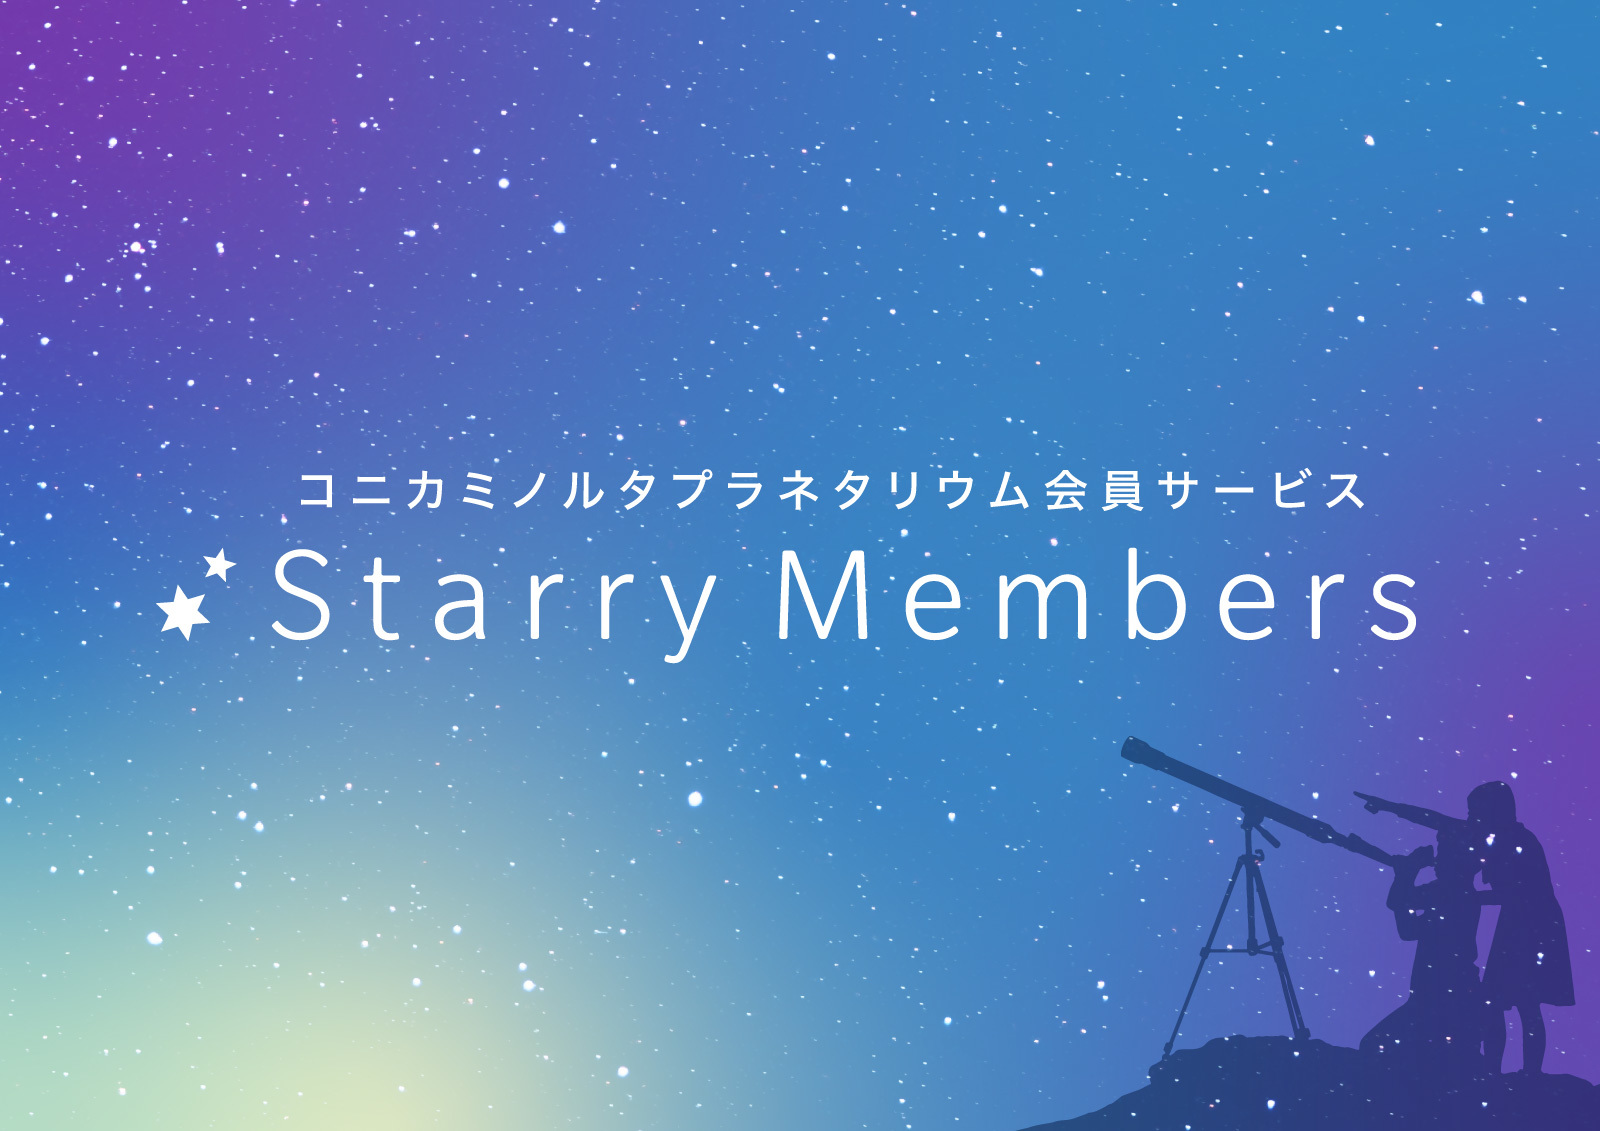 「Starry Members」会員10万人記念
『会員限定Thank Youクーポン』プレゼント
2023年1月10日(火)12:00～